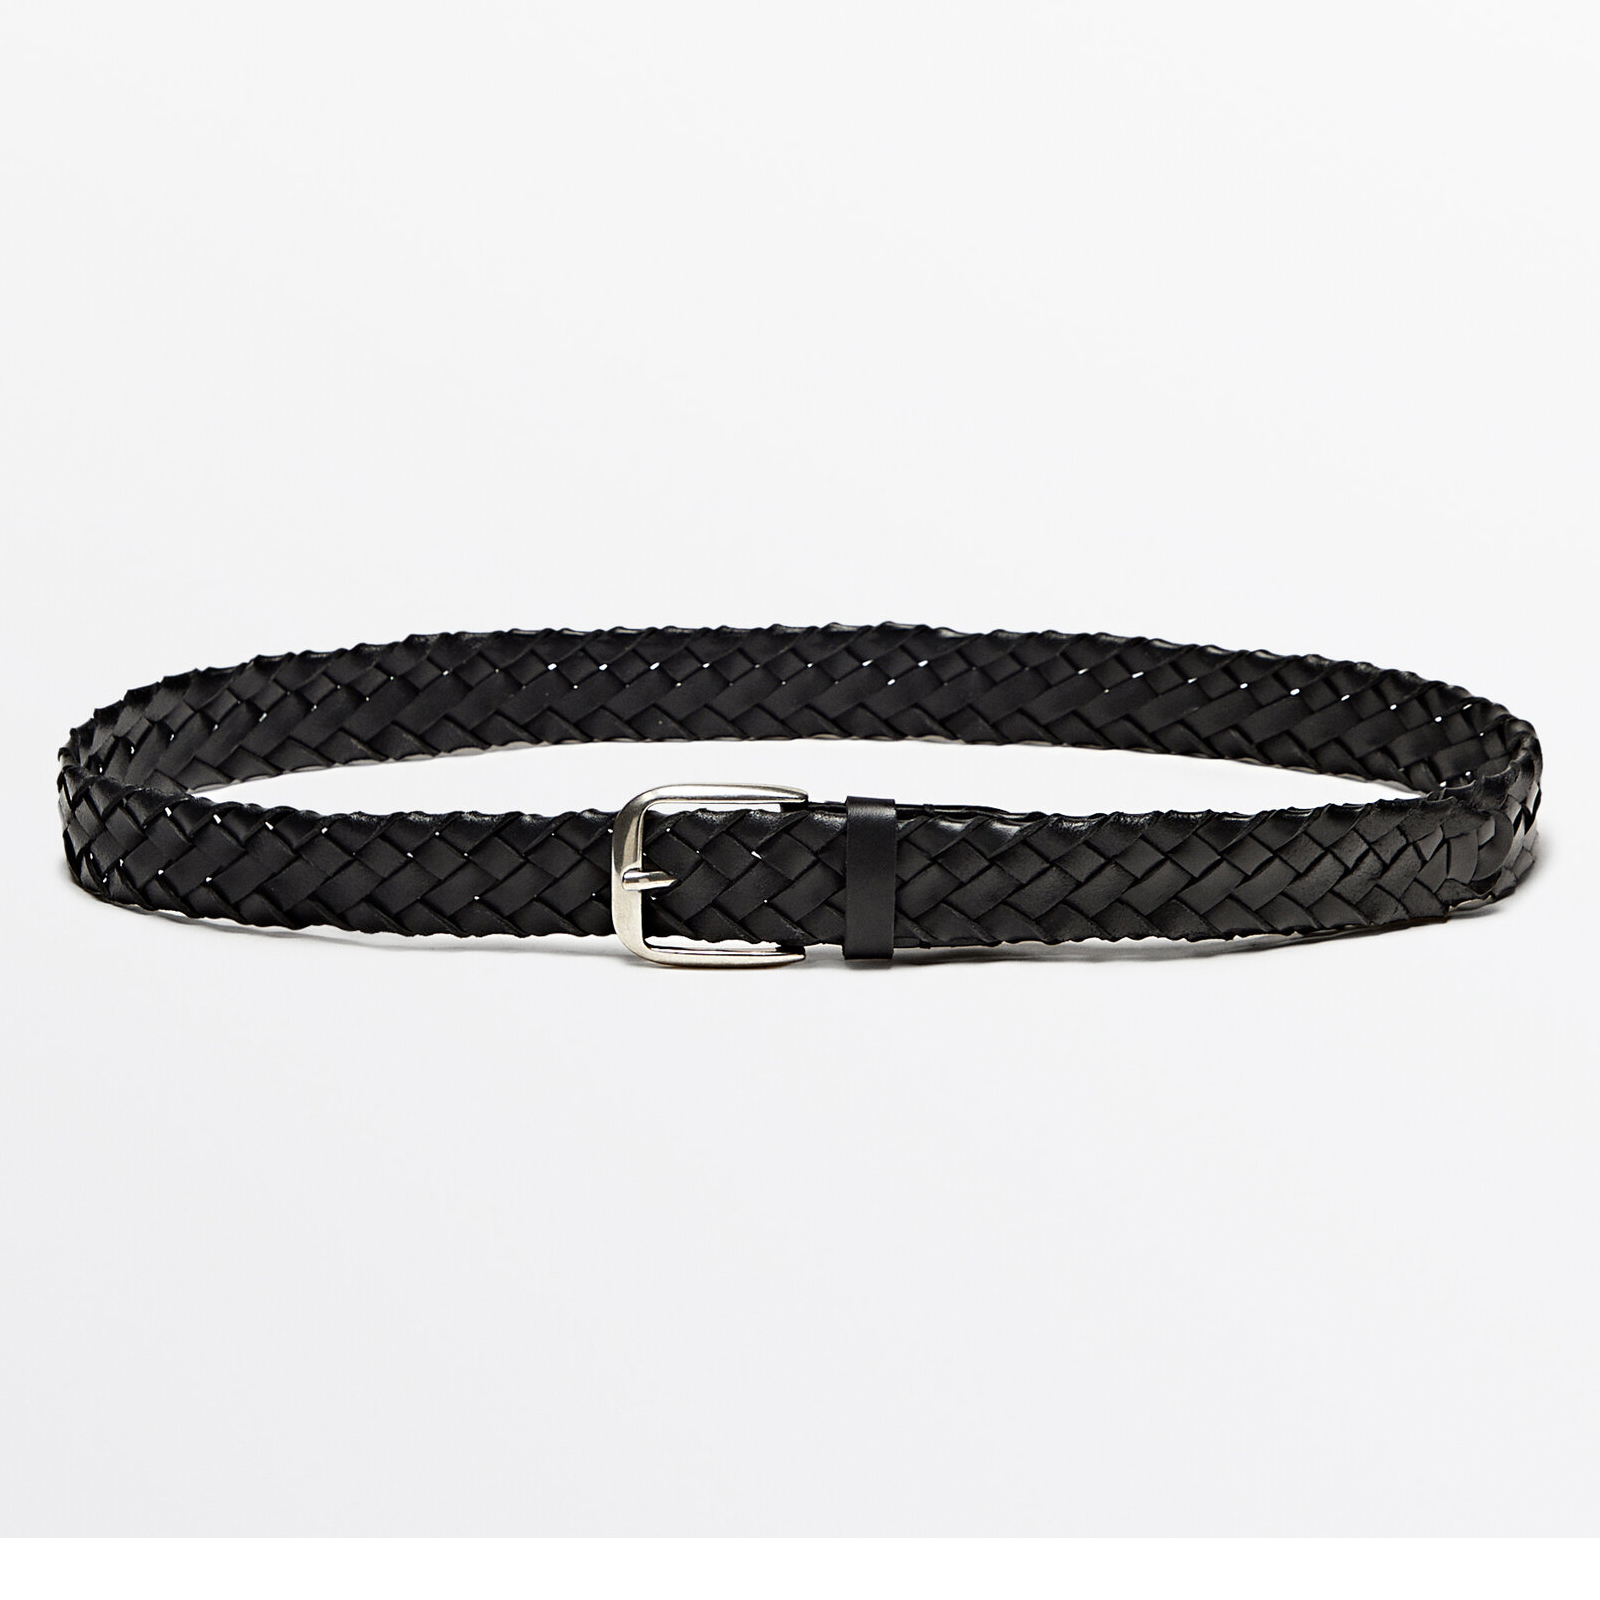 Ремень Massimo Dutti Braided Leather, черный ремень massimo dutti leather belt thin limited edition чёрный